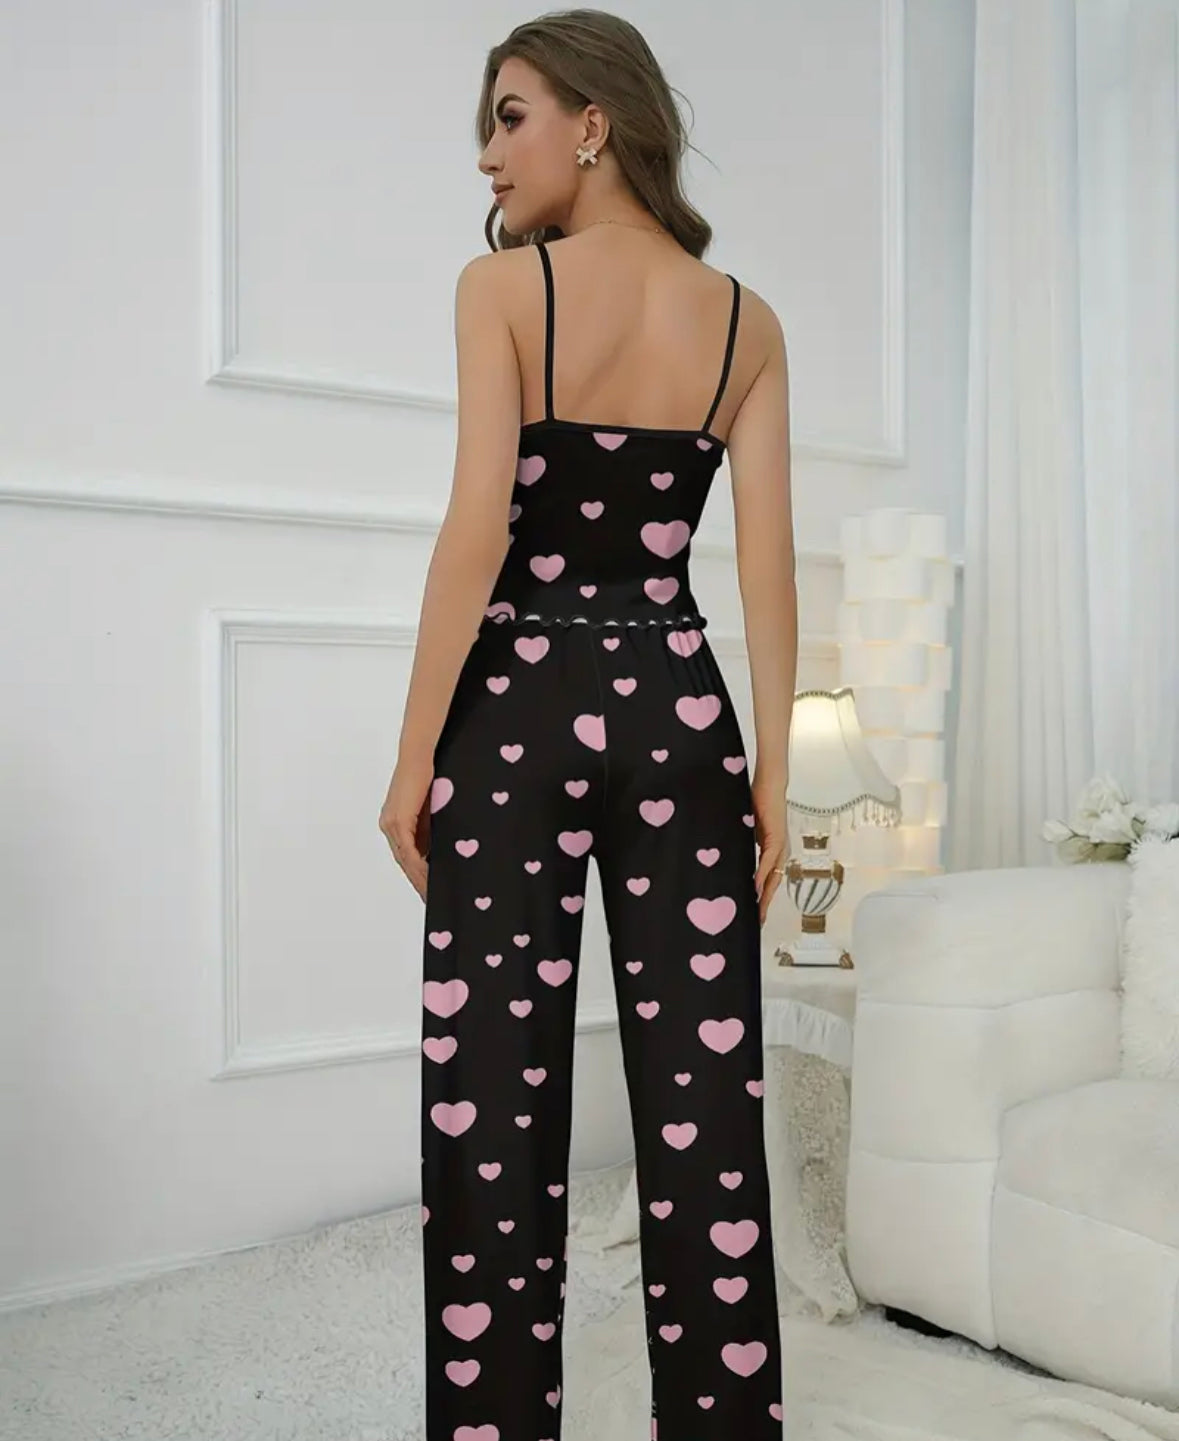 Pink hearts Pajama Set